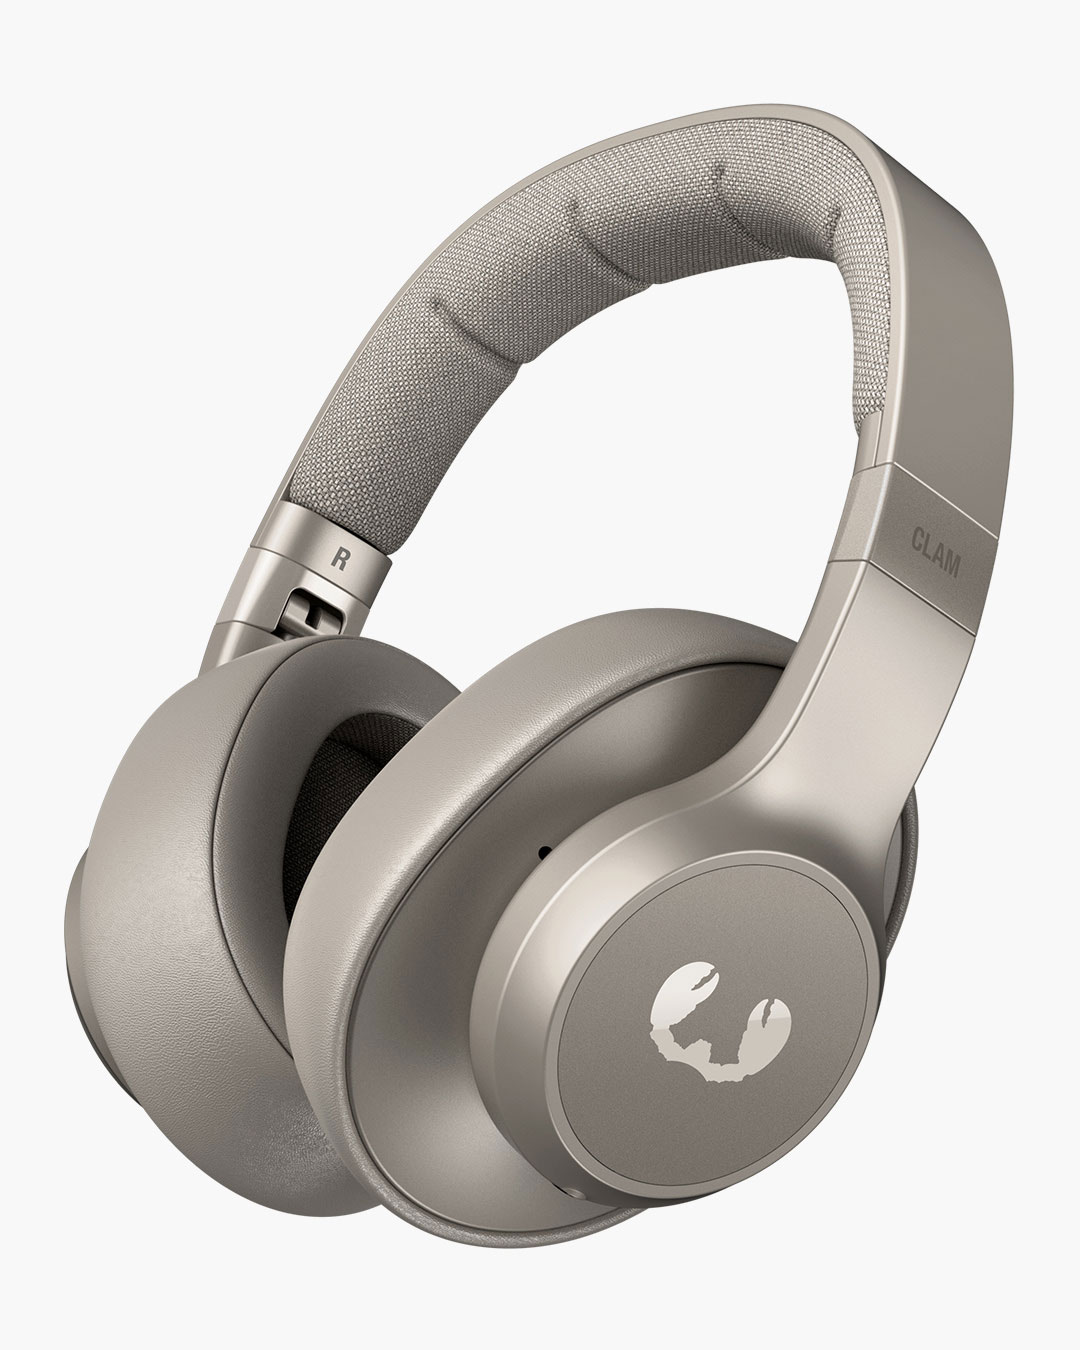 Fresh 'n Rebel - Clam - Wireless over-ear headphones - Silky Sand